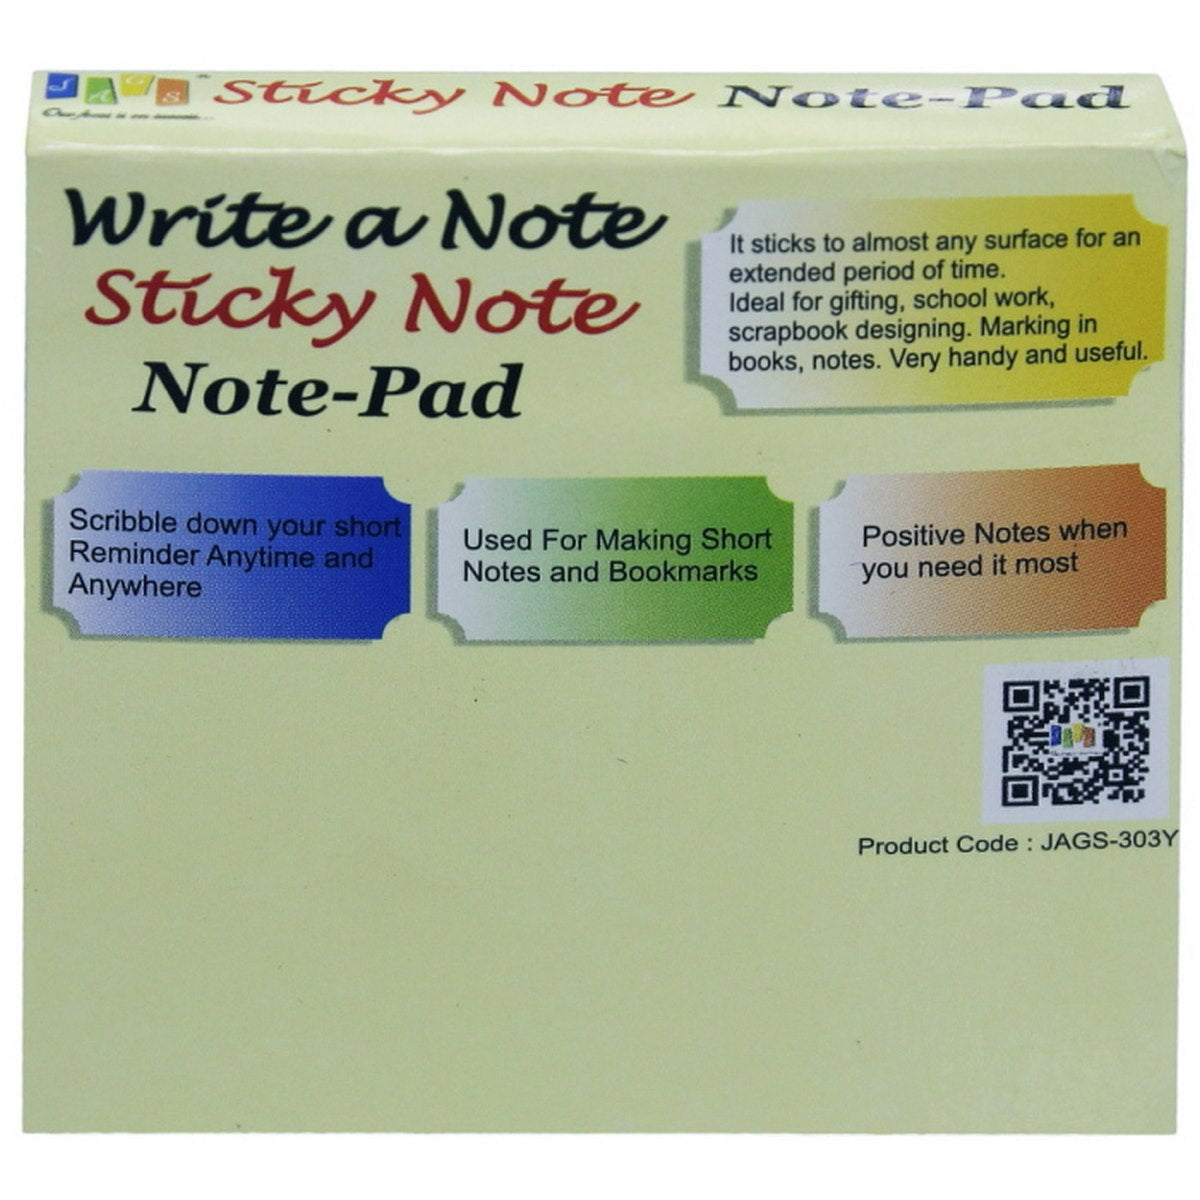 jags-mumbai Sticky Notes Yellow Sticky Note Pad 100Sheets (76mmX76mm)